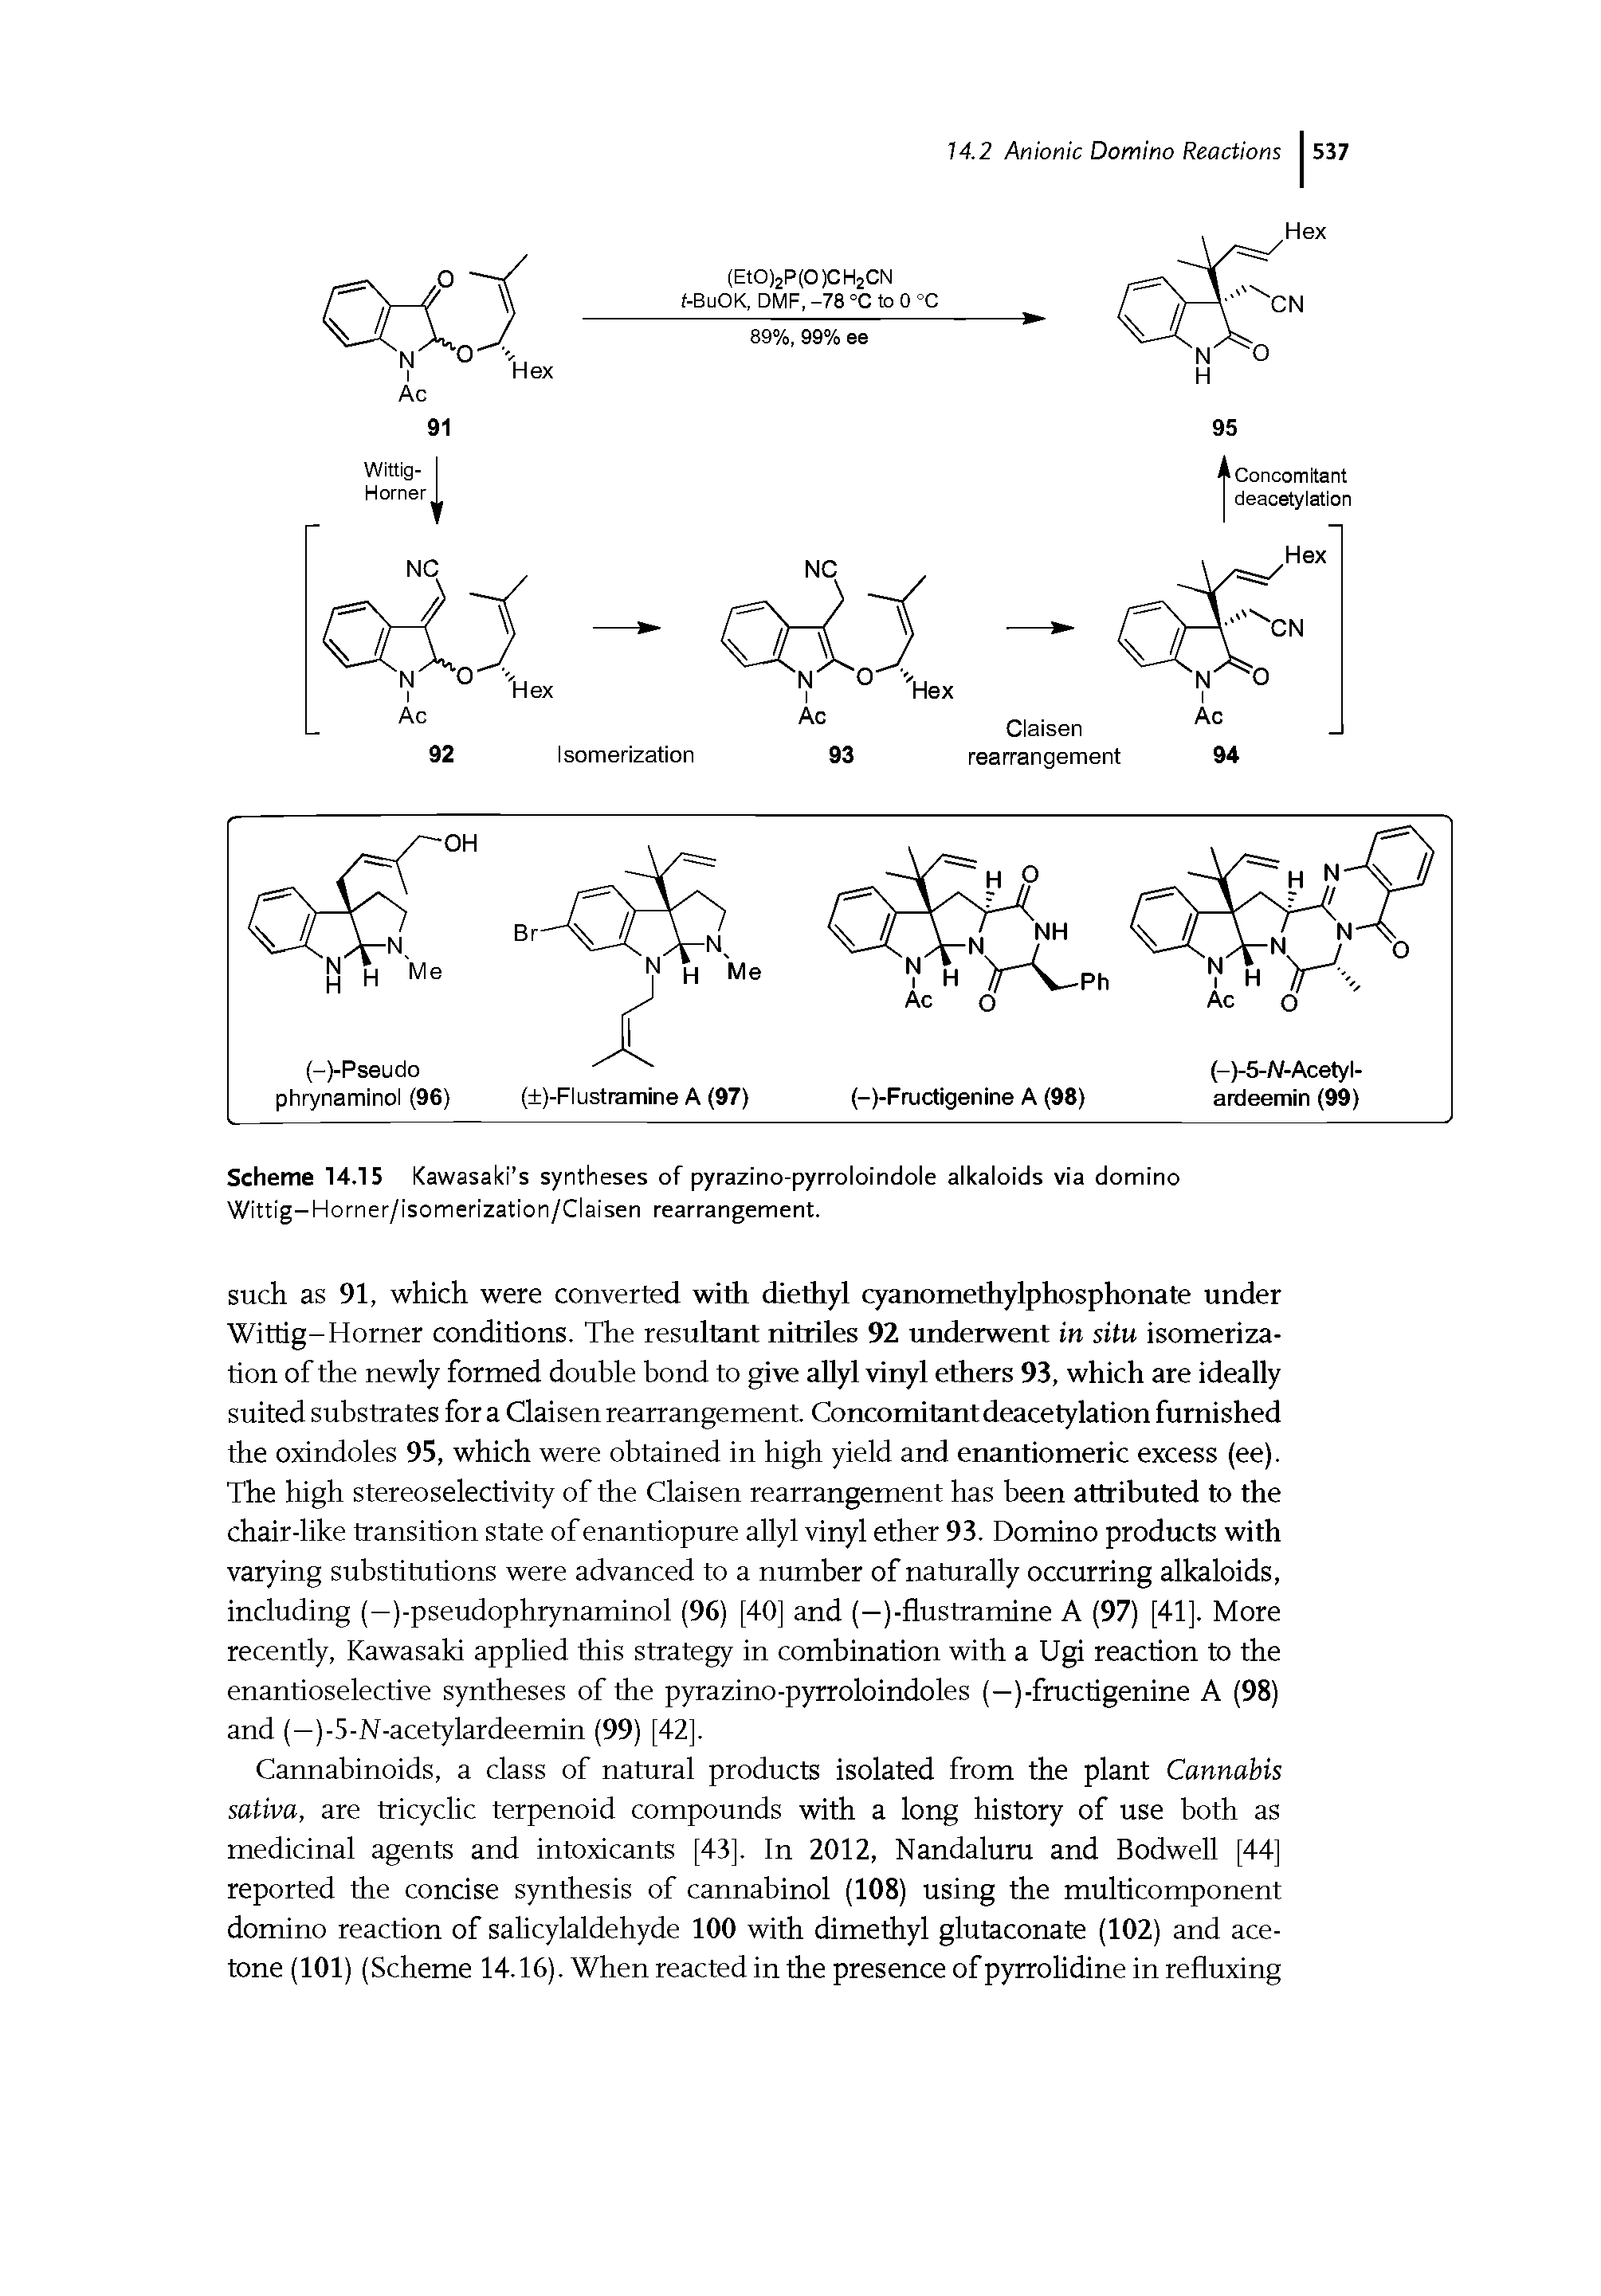 Scheme 14.15 Kawasaki s syntheses of pyrazino-pyrroloindole alkaloids via domino Wittig-Horner/isomerization/Claisen rearrangement.